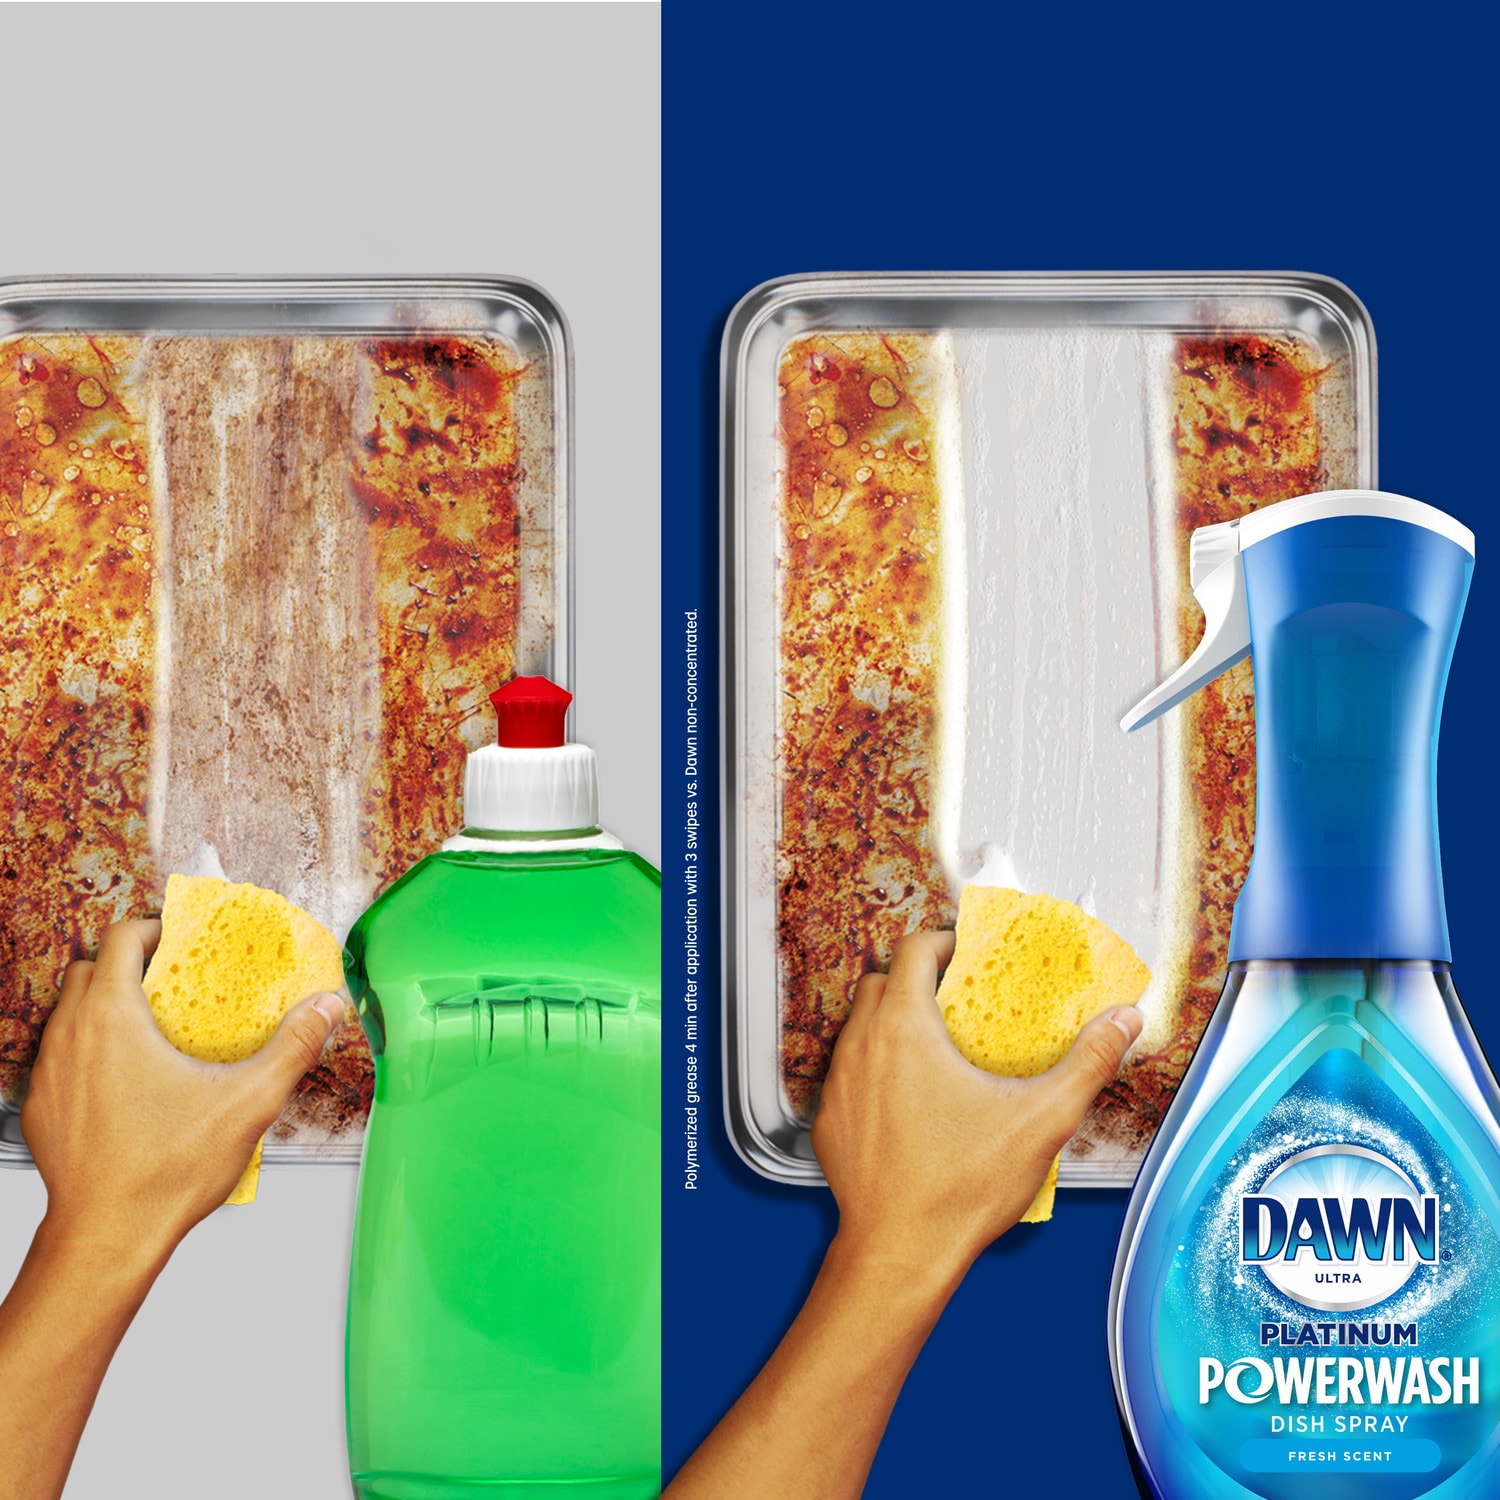  Dawn Platinum Powerwash Dish Spray - Citrus Scent : Health &  Household